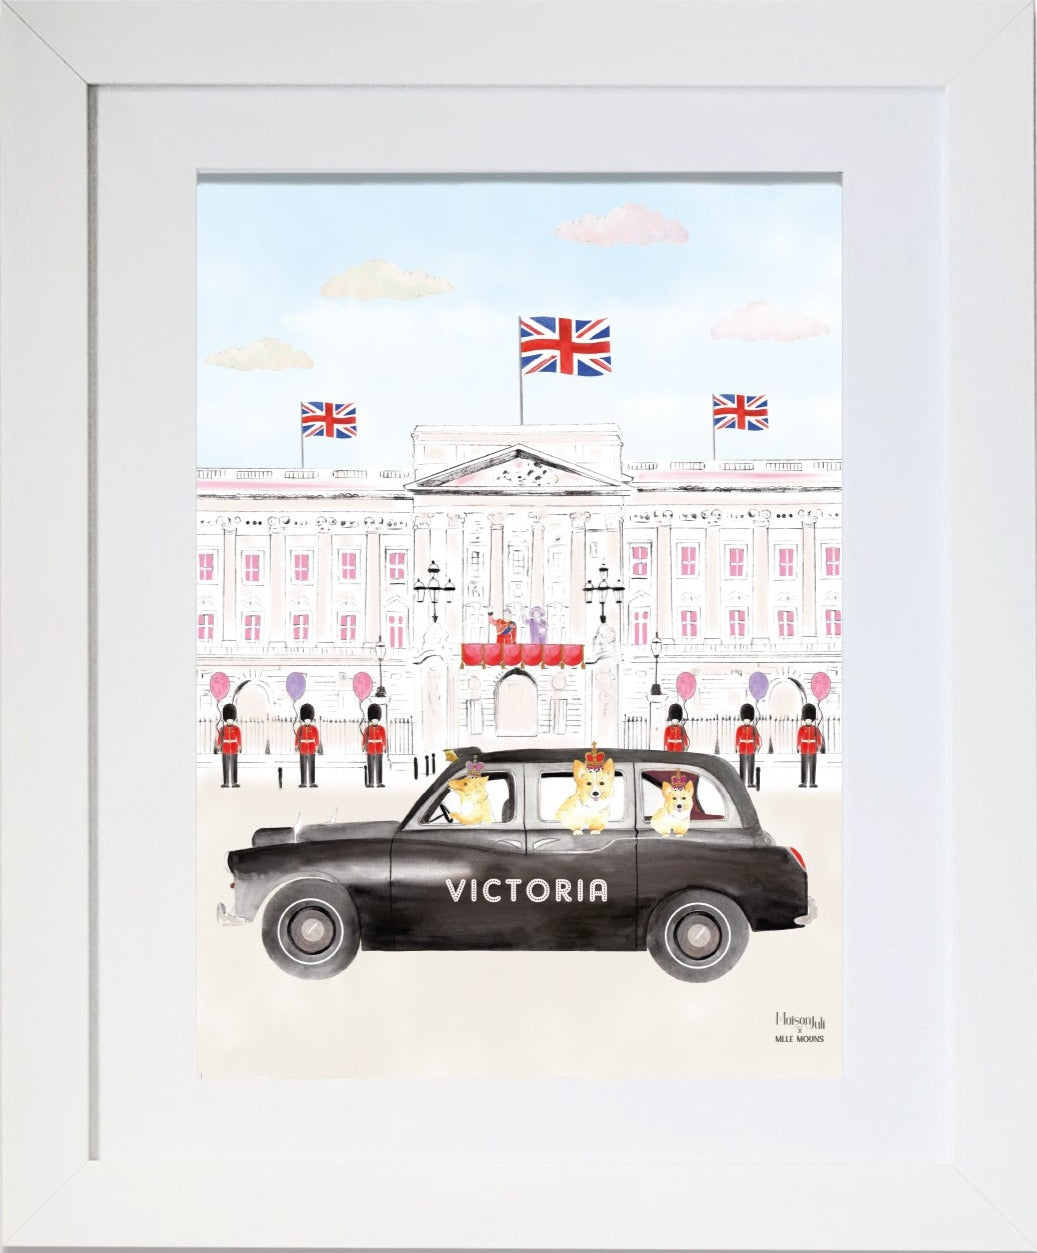 The Black Cab of Buckingham Palace for girls